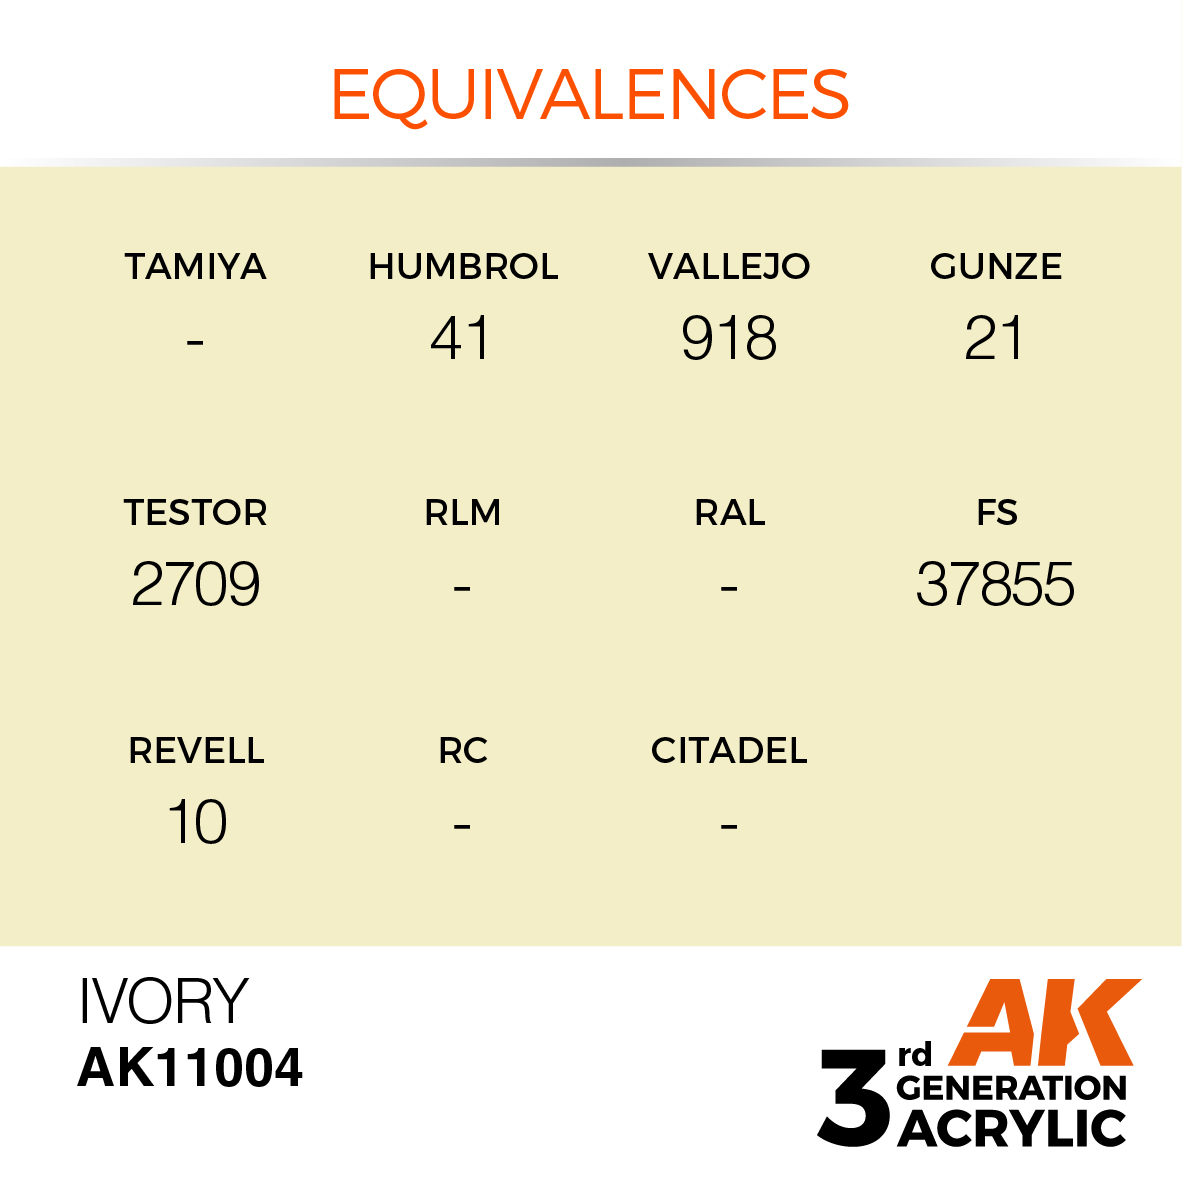 AK11004 Ivory (3rd-Generation) (17mL)